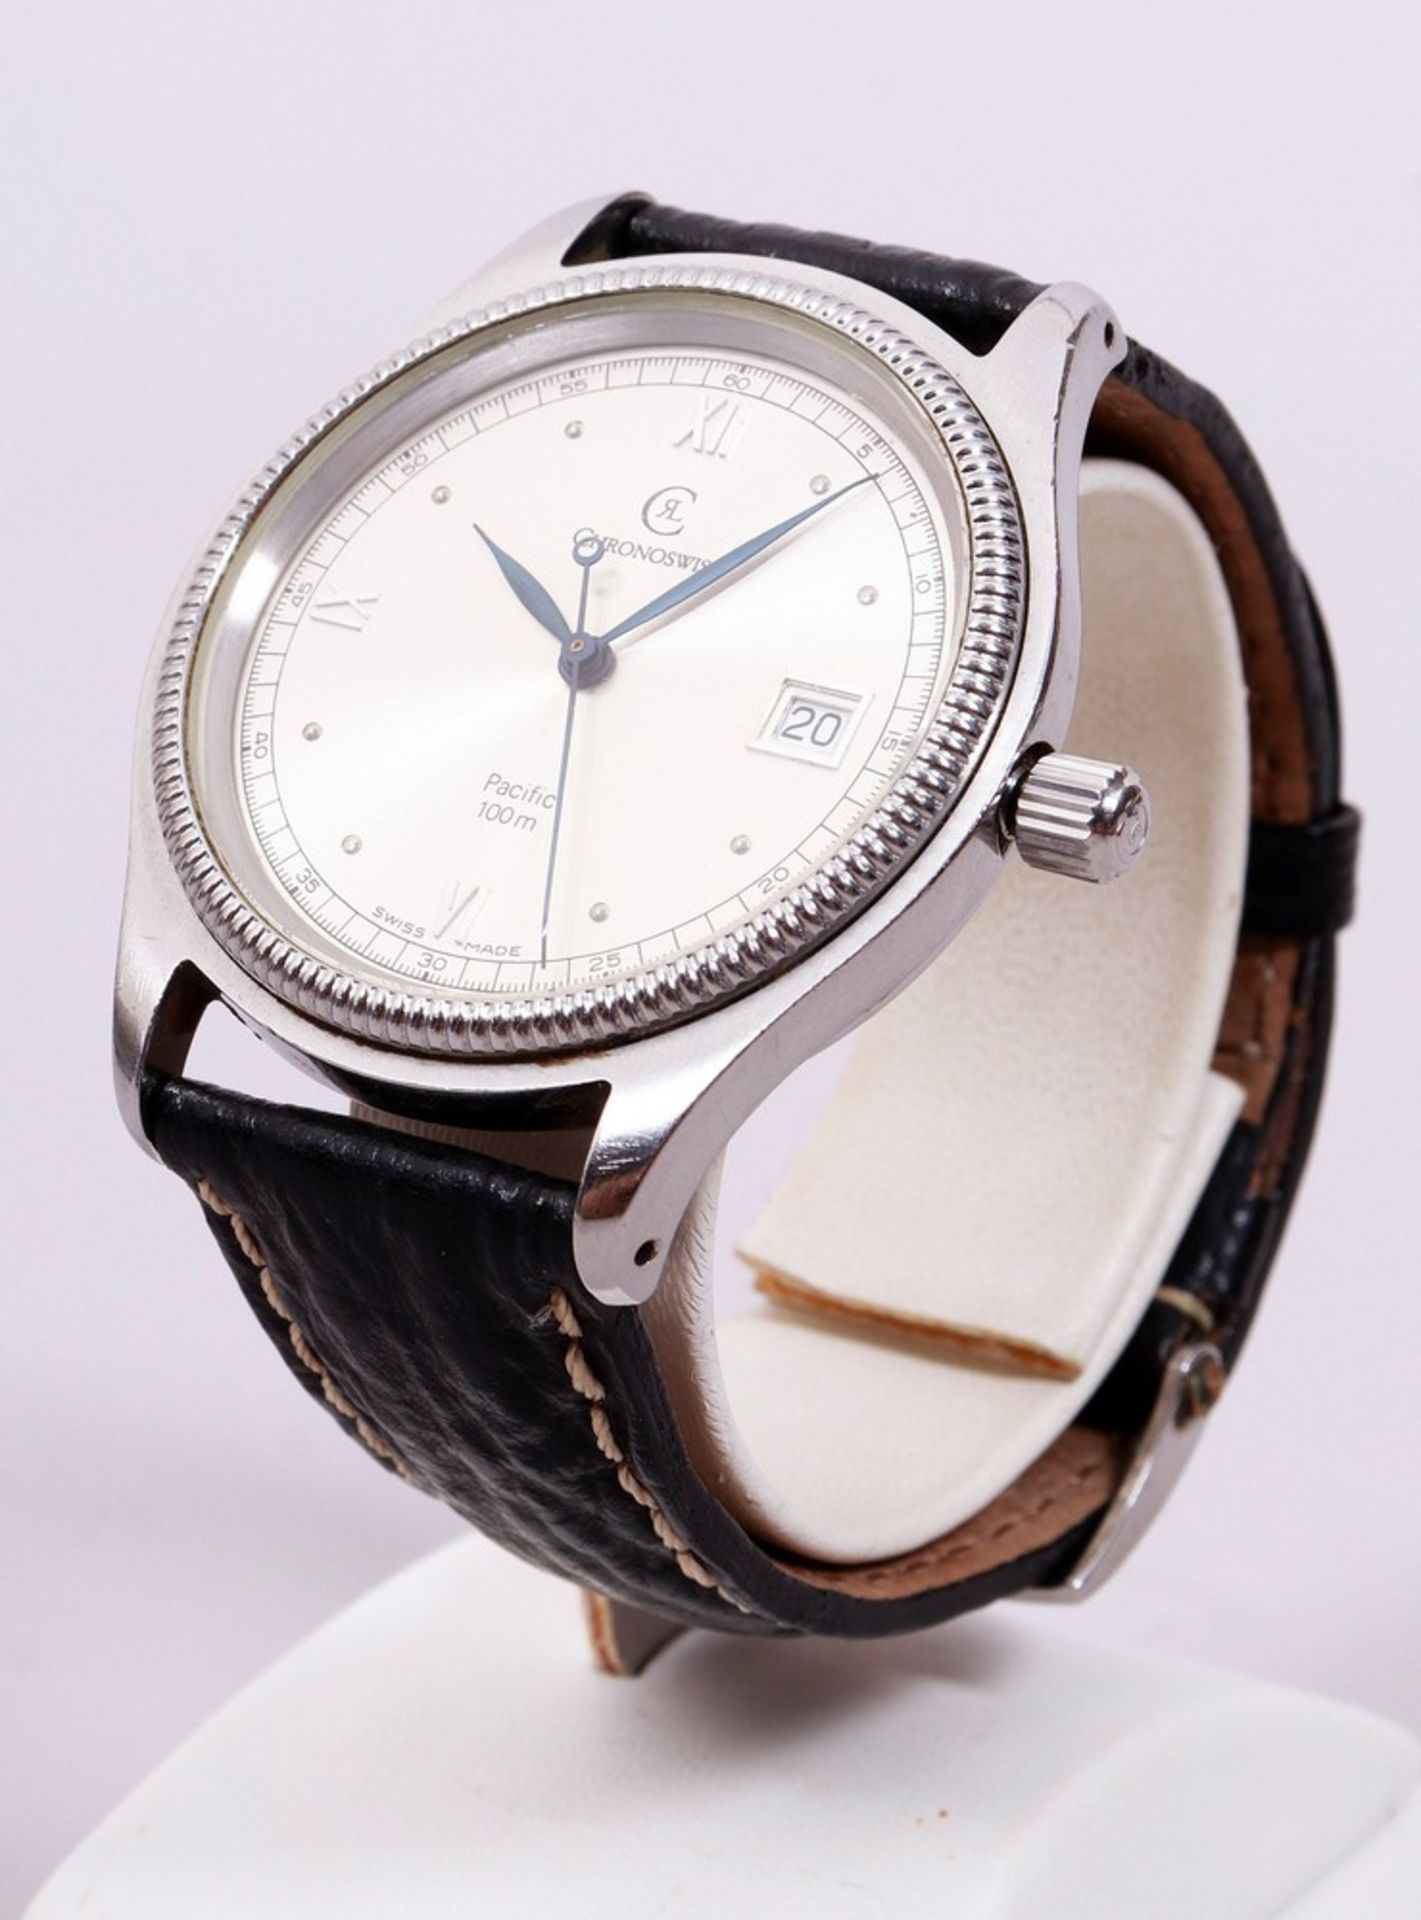 Herren-Armbanduhr, Chronoswiss, Modell "Pacific 100m", 1990er Jahre - Bild 3 aus 13